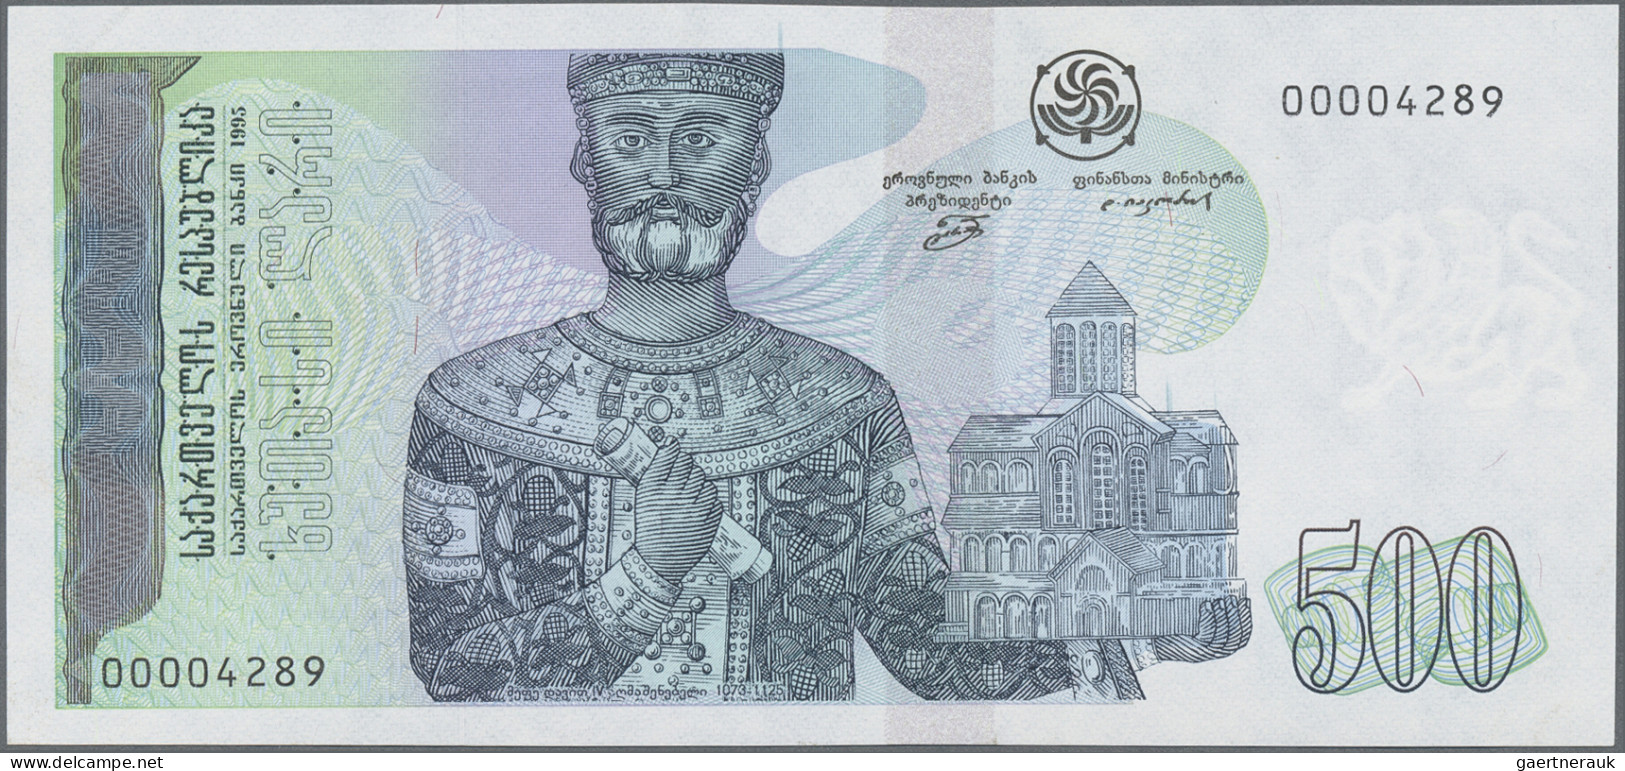 Georgia: Georgian National Bank, 500 Lari 1995, With Low Serial # 00004289, P.60 - Georgië